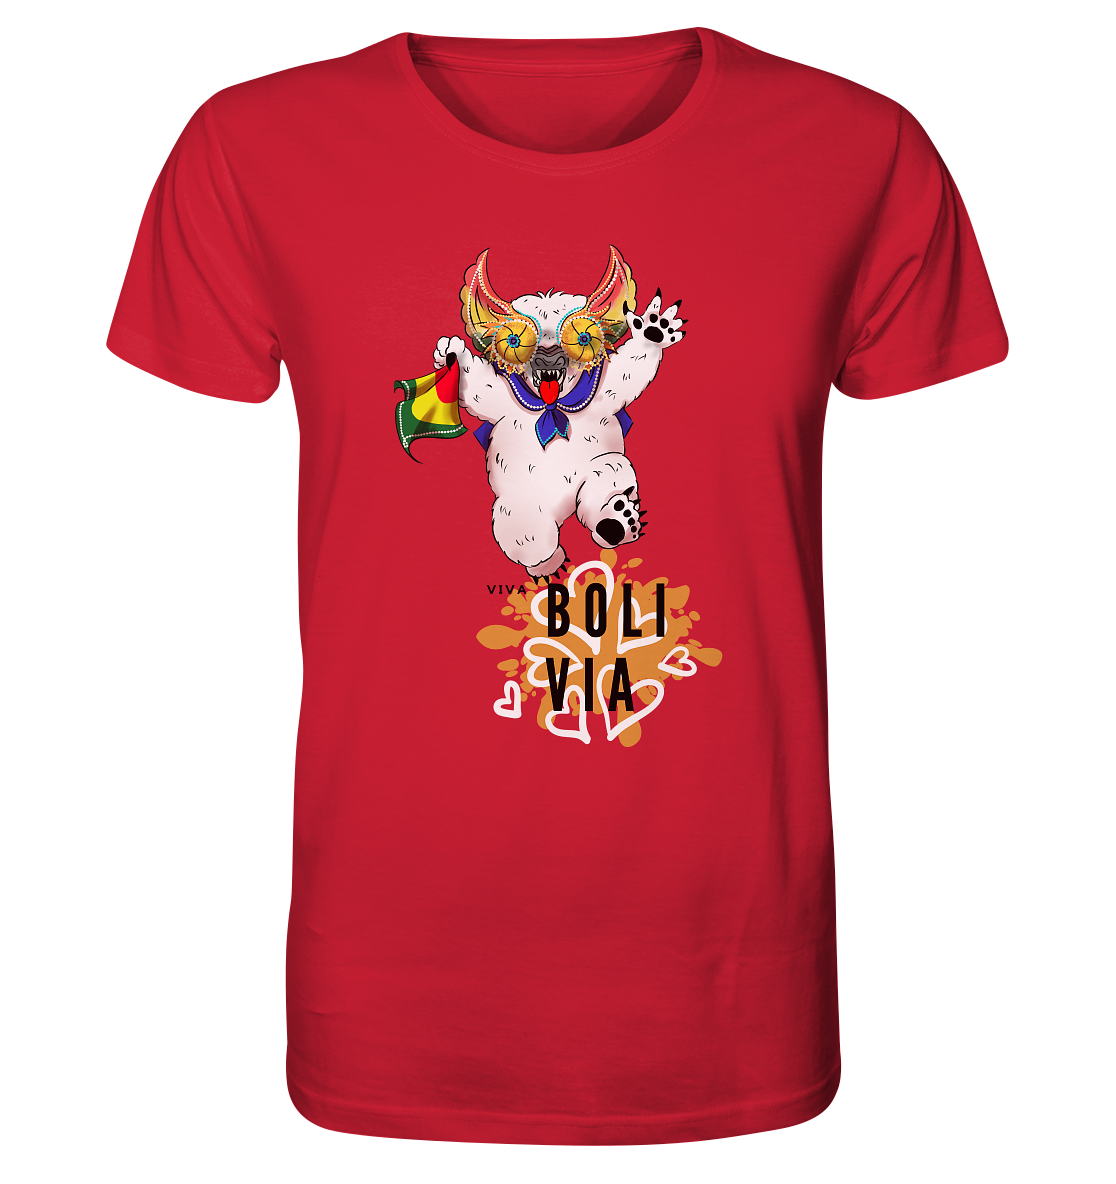 
                  
                    Camiseta Oso Viva Bolivia - Camiseta Orgánica (100% algodón orgánico, diferentes colores)
                  
                